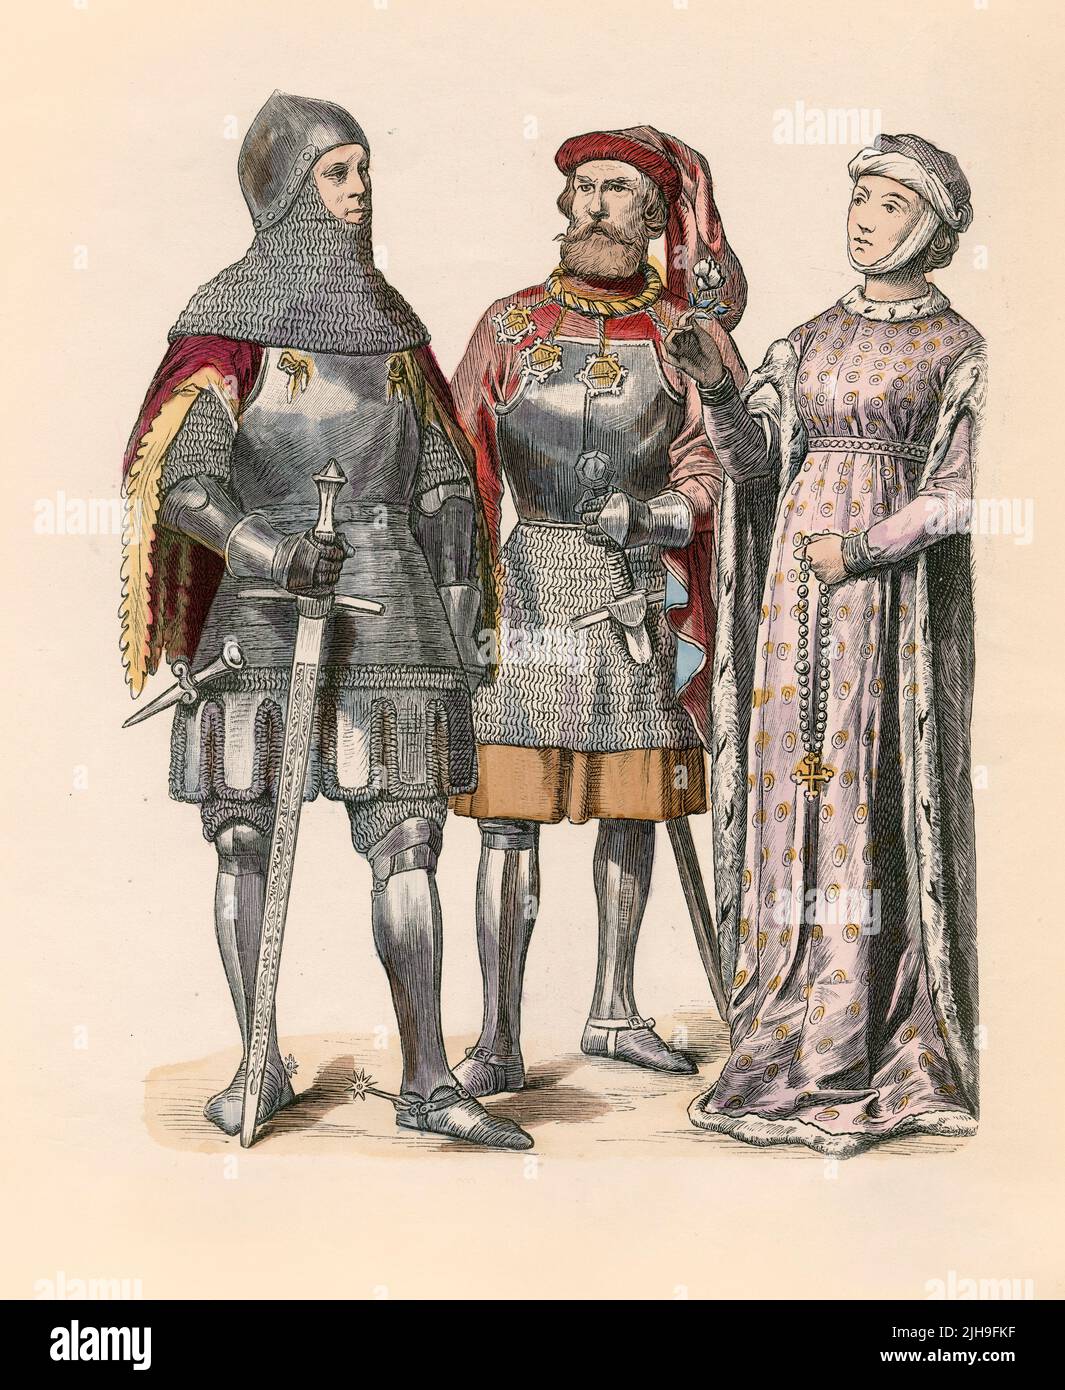 Philippe of Ingelheim (1431), Martin of Seinsheim (1434), Woman (About 1410), Germany, 15th Century, Illustration, The History of Costume, Braun & Schneider, Munich, Germany, 1861-1880 Stock Photo